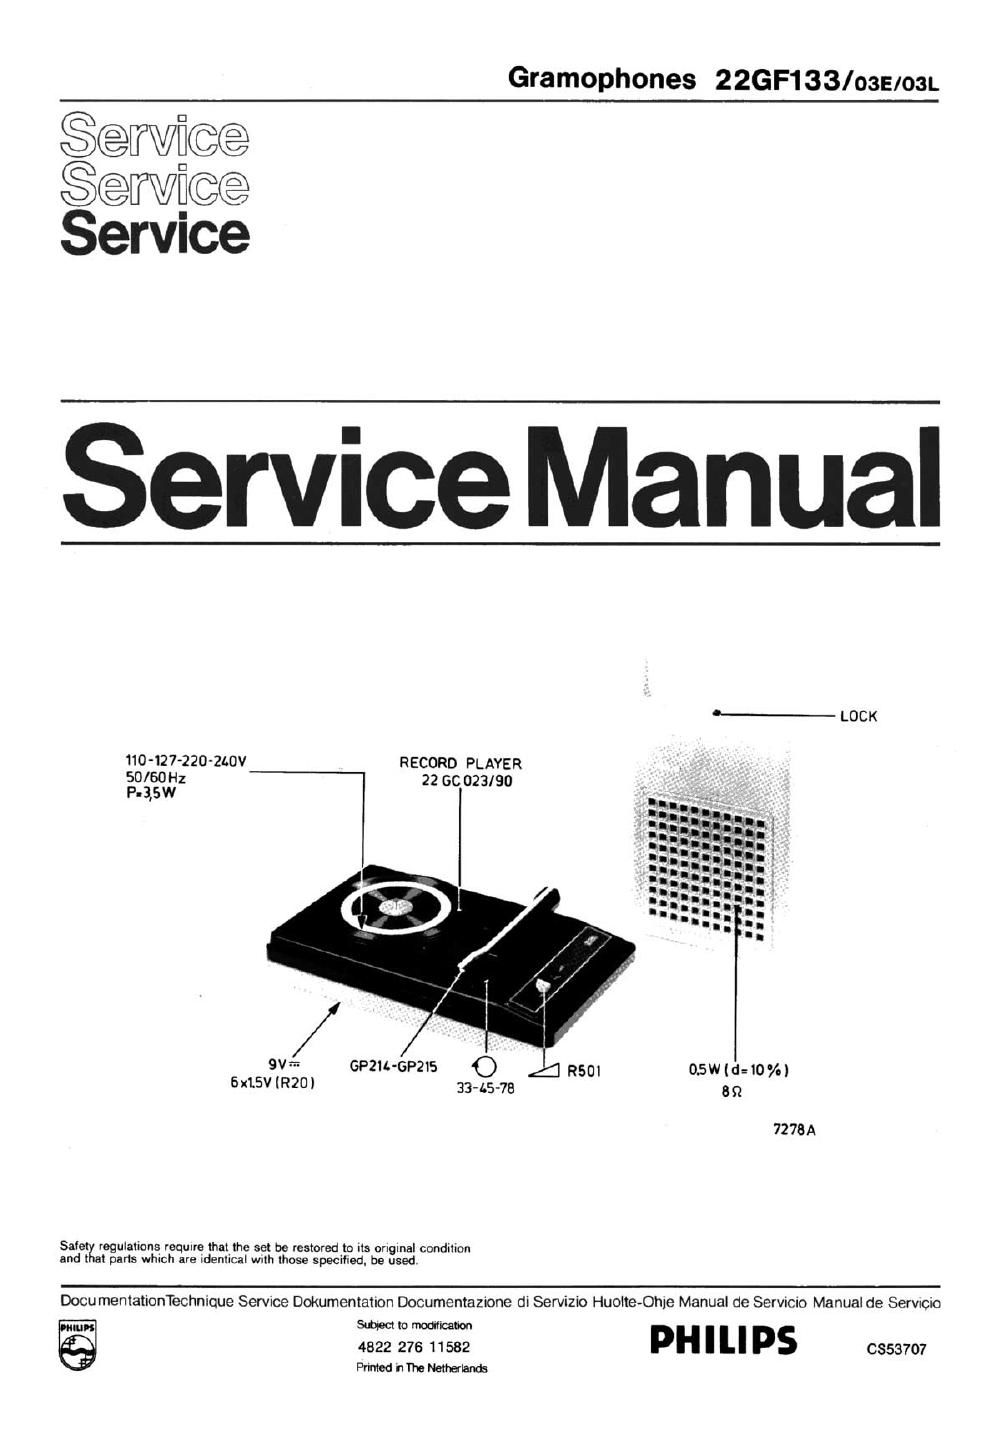 philips 22 gf 133 service manual